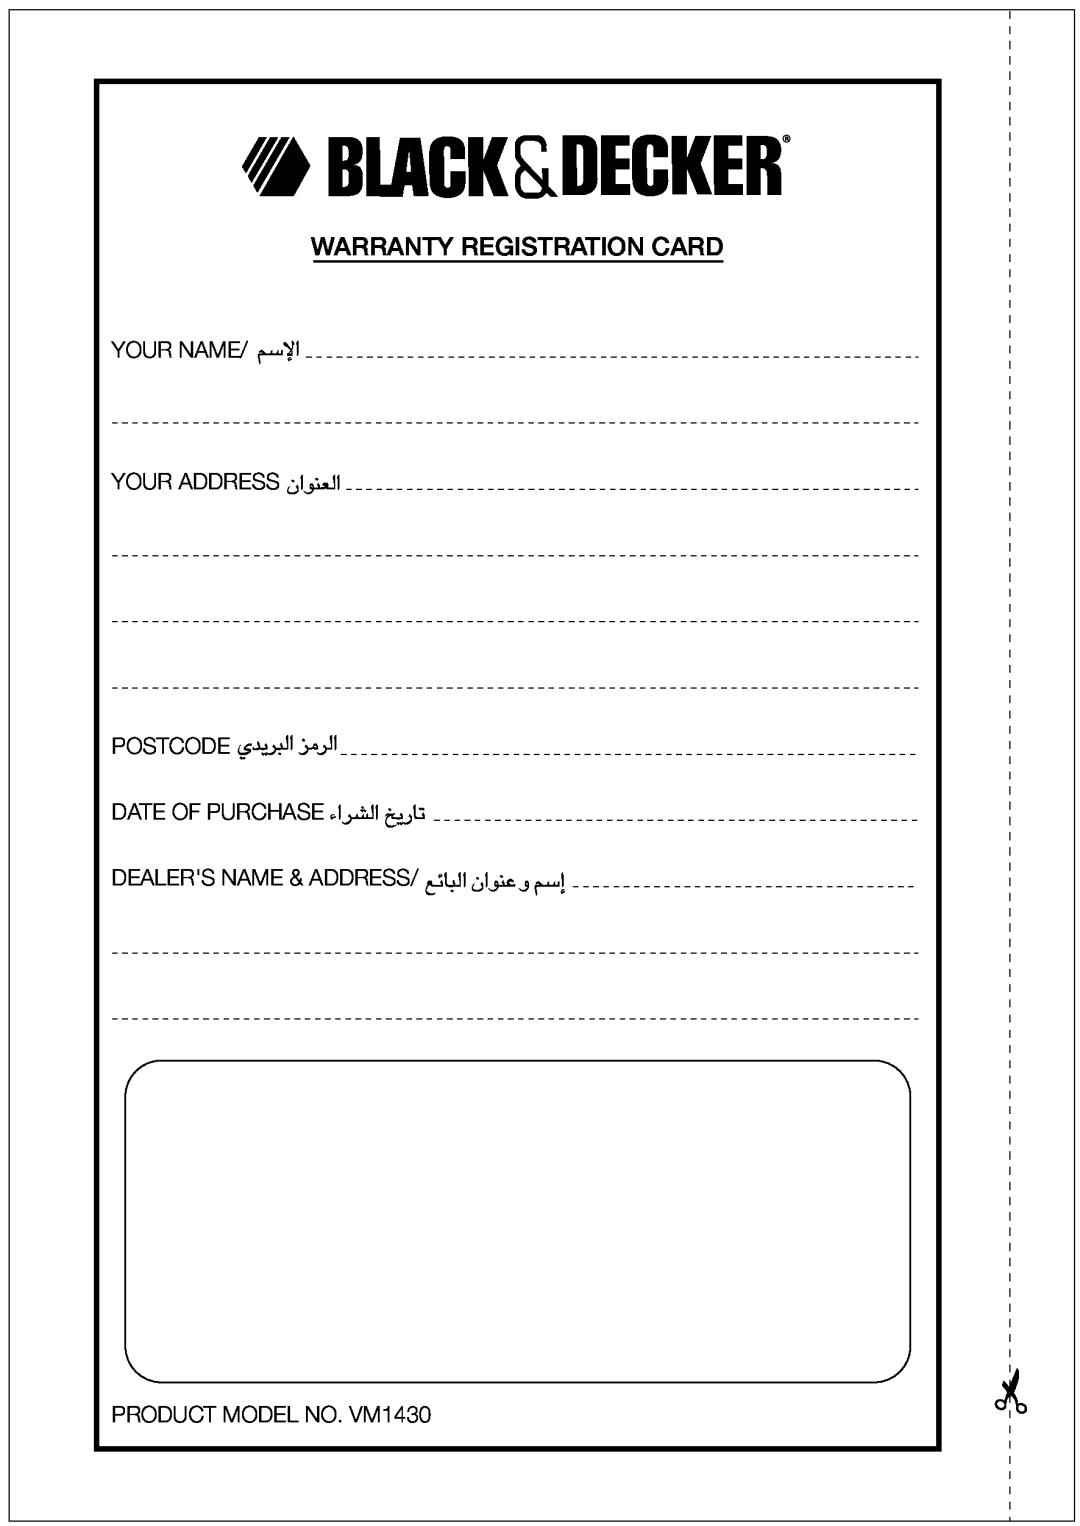 Black & Decker VM1430 Warranty Registration Card, «ùßr, d¥bÍ∞∂« d±e∞«, Uzl∞∂« ´Mu«Ê Ë ßr≈, DATE OF PURCHASE Ad«¡∞« ¢U¸¥a 